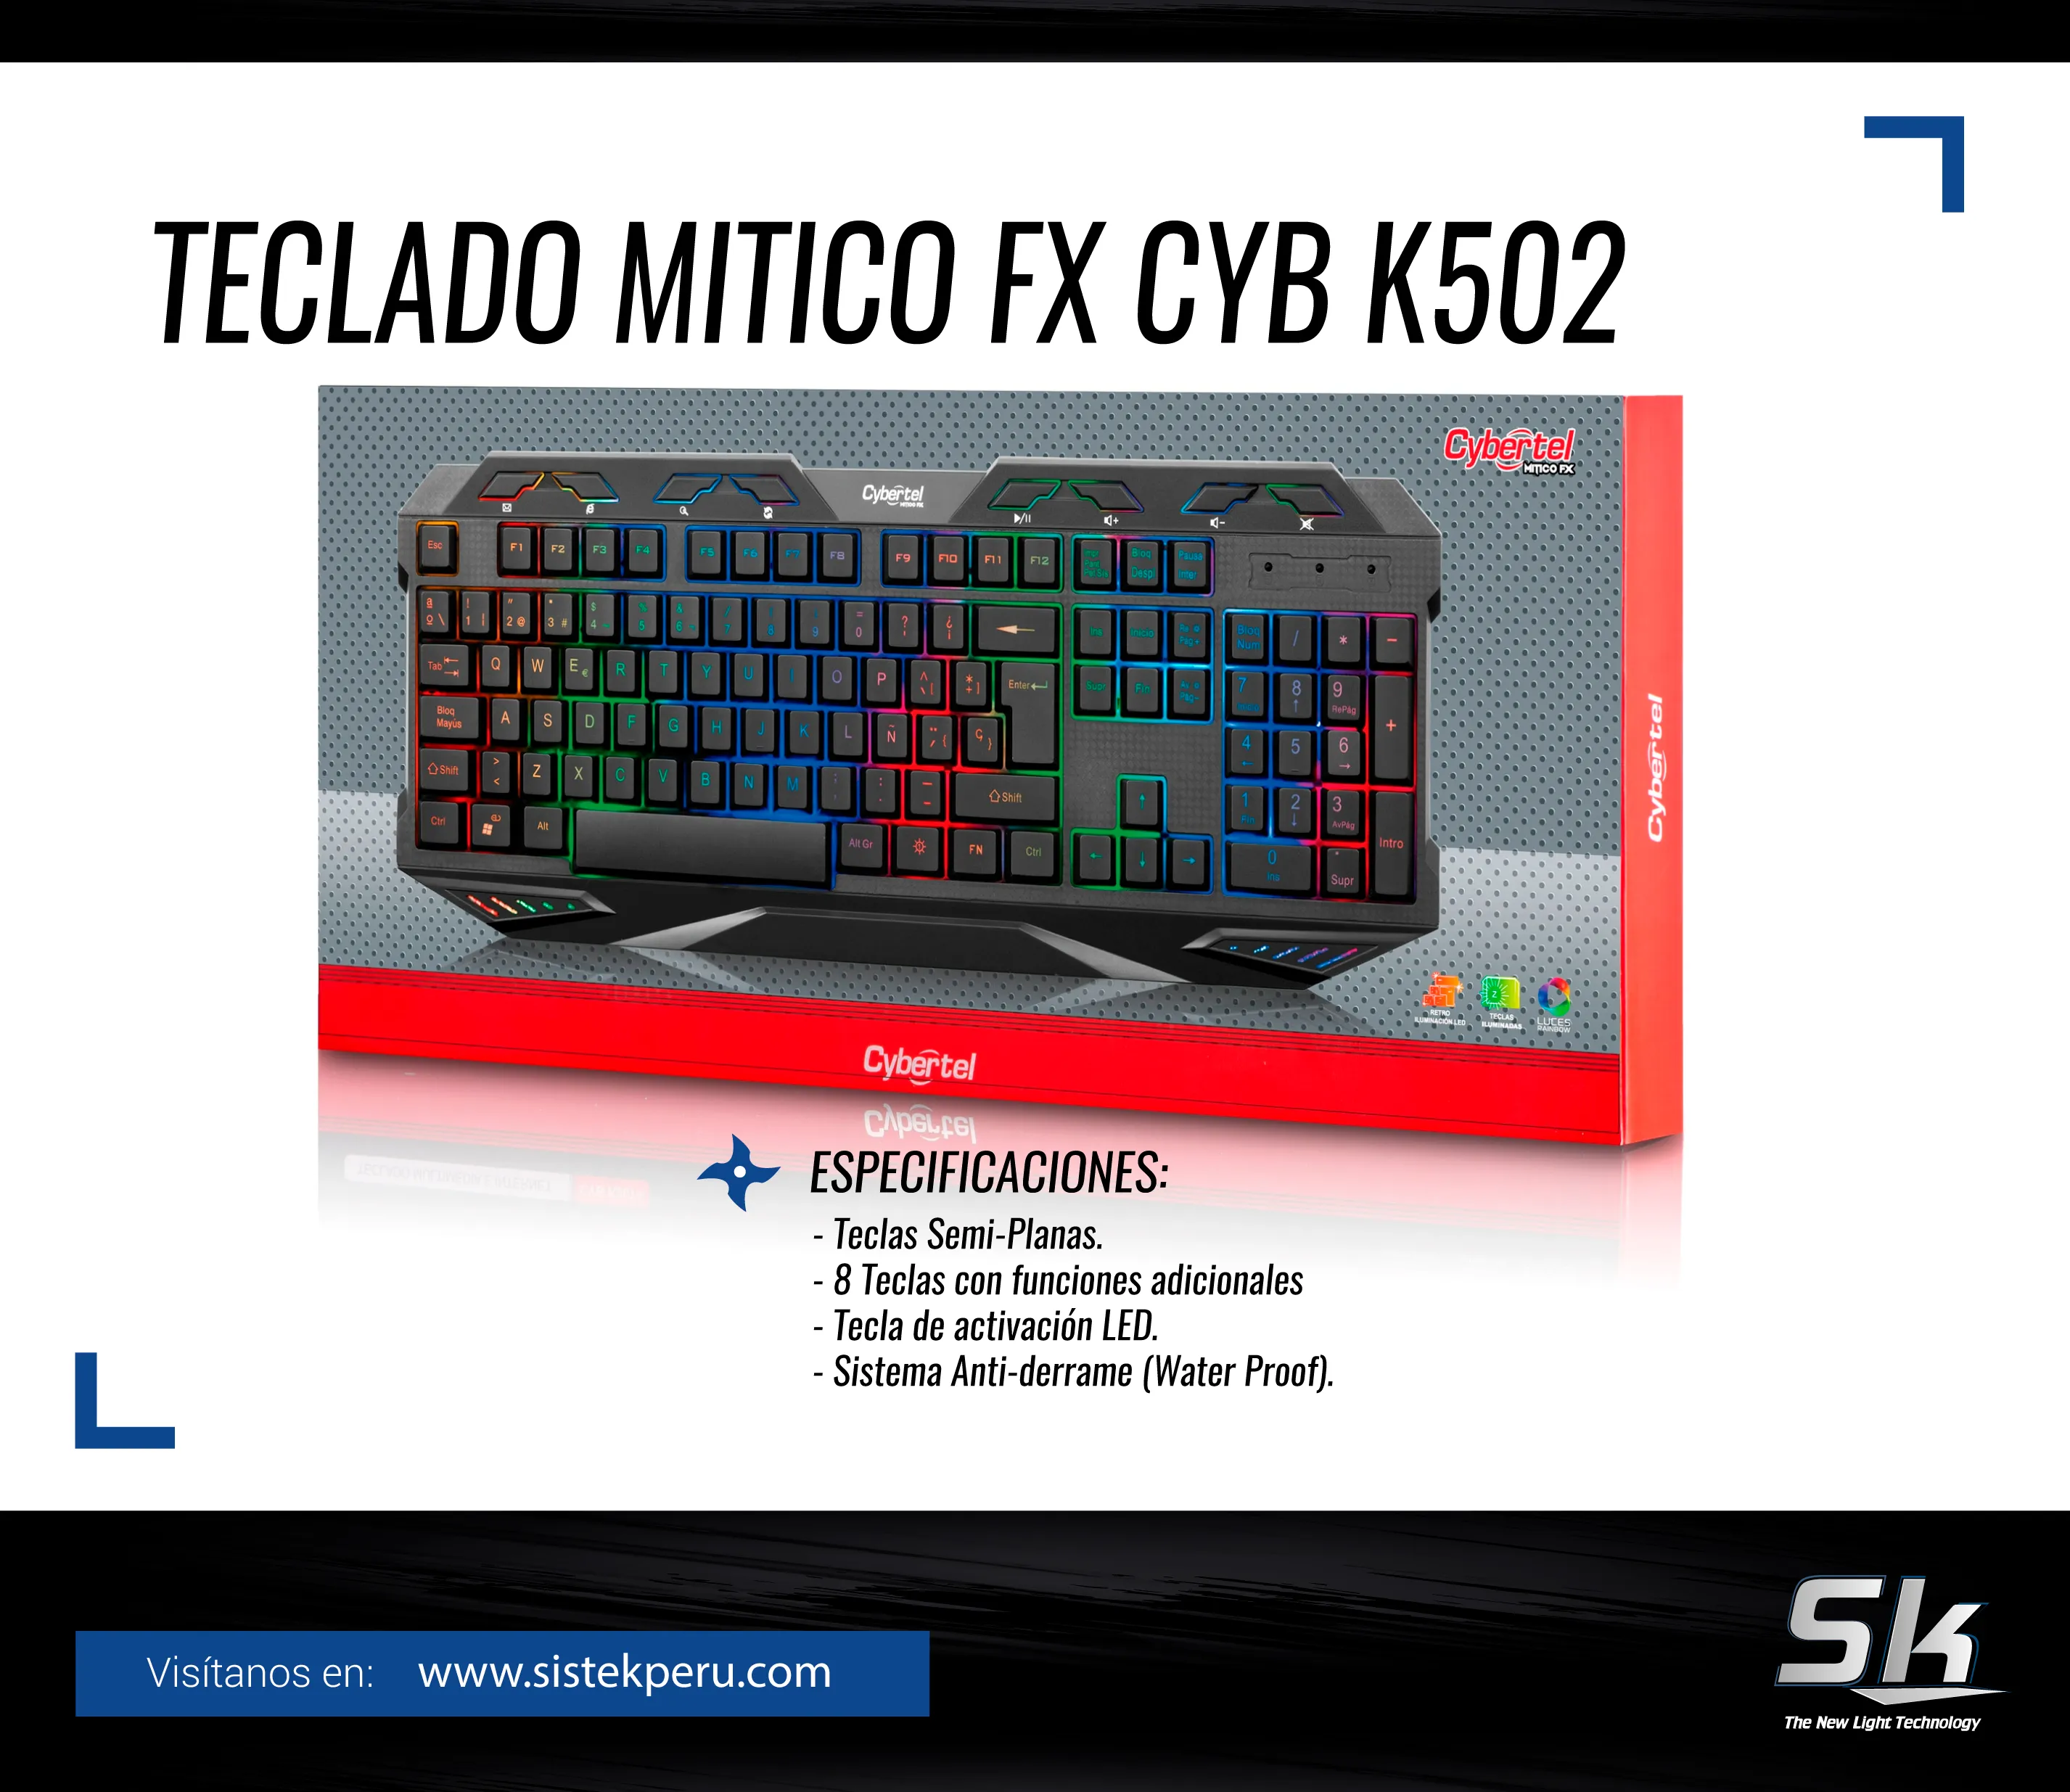 TECLADO GAMER CYBERTEL MITICO FX CYB K502